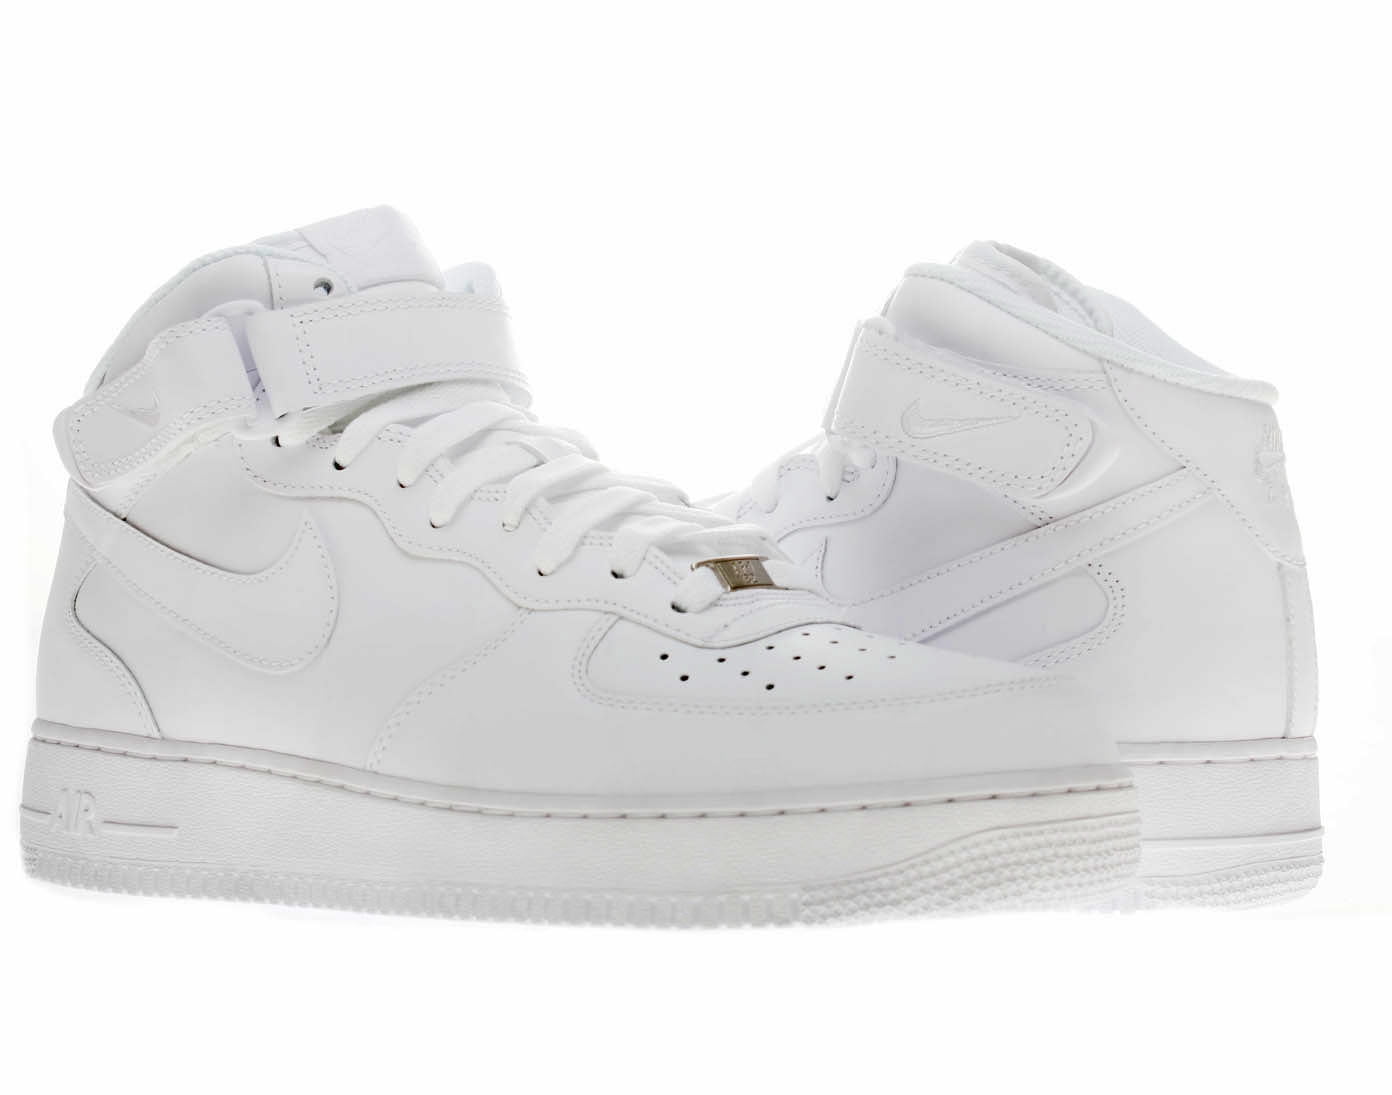 Melodieus bekennen alias Nike Mens Air Force 1 Mid 07 White/White Basketball Shoes (12 D(M) US) -  Walmart.com